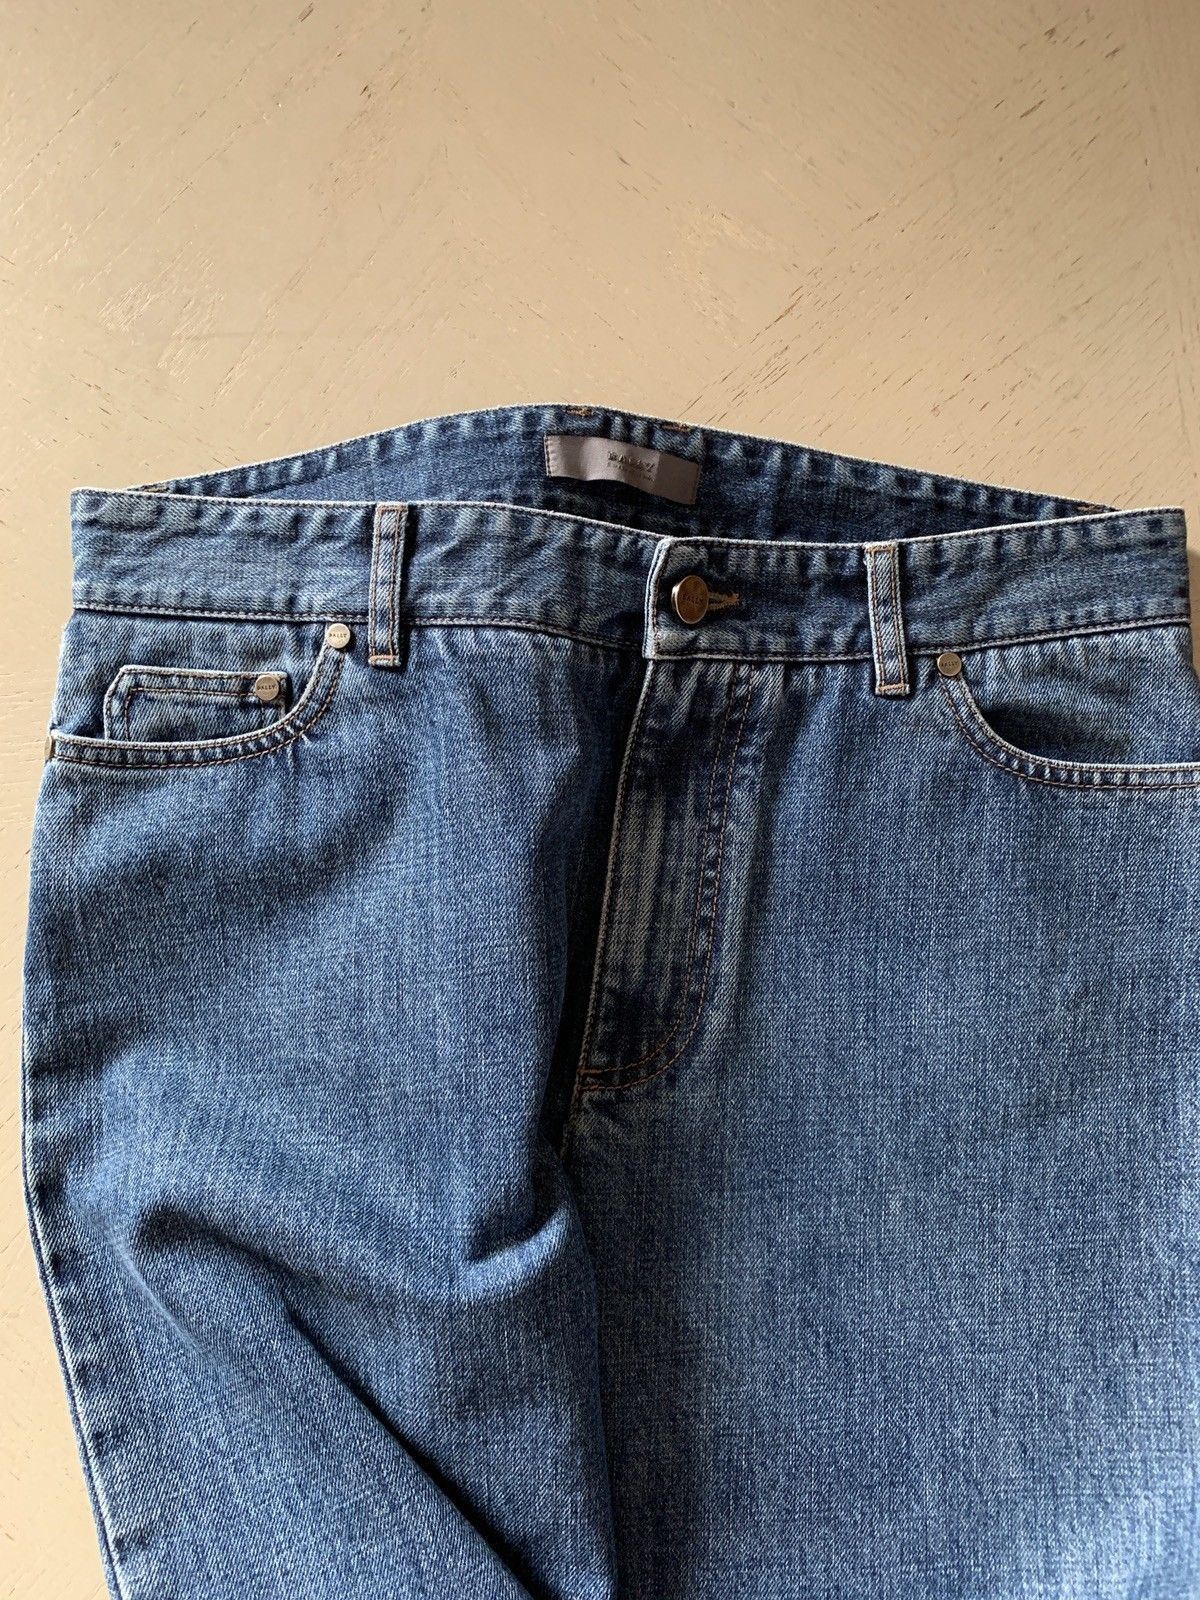 New $550 Bally Women's Jeans Pants Blue 8 US ( 40 Eu ) Italy